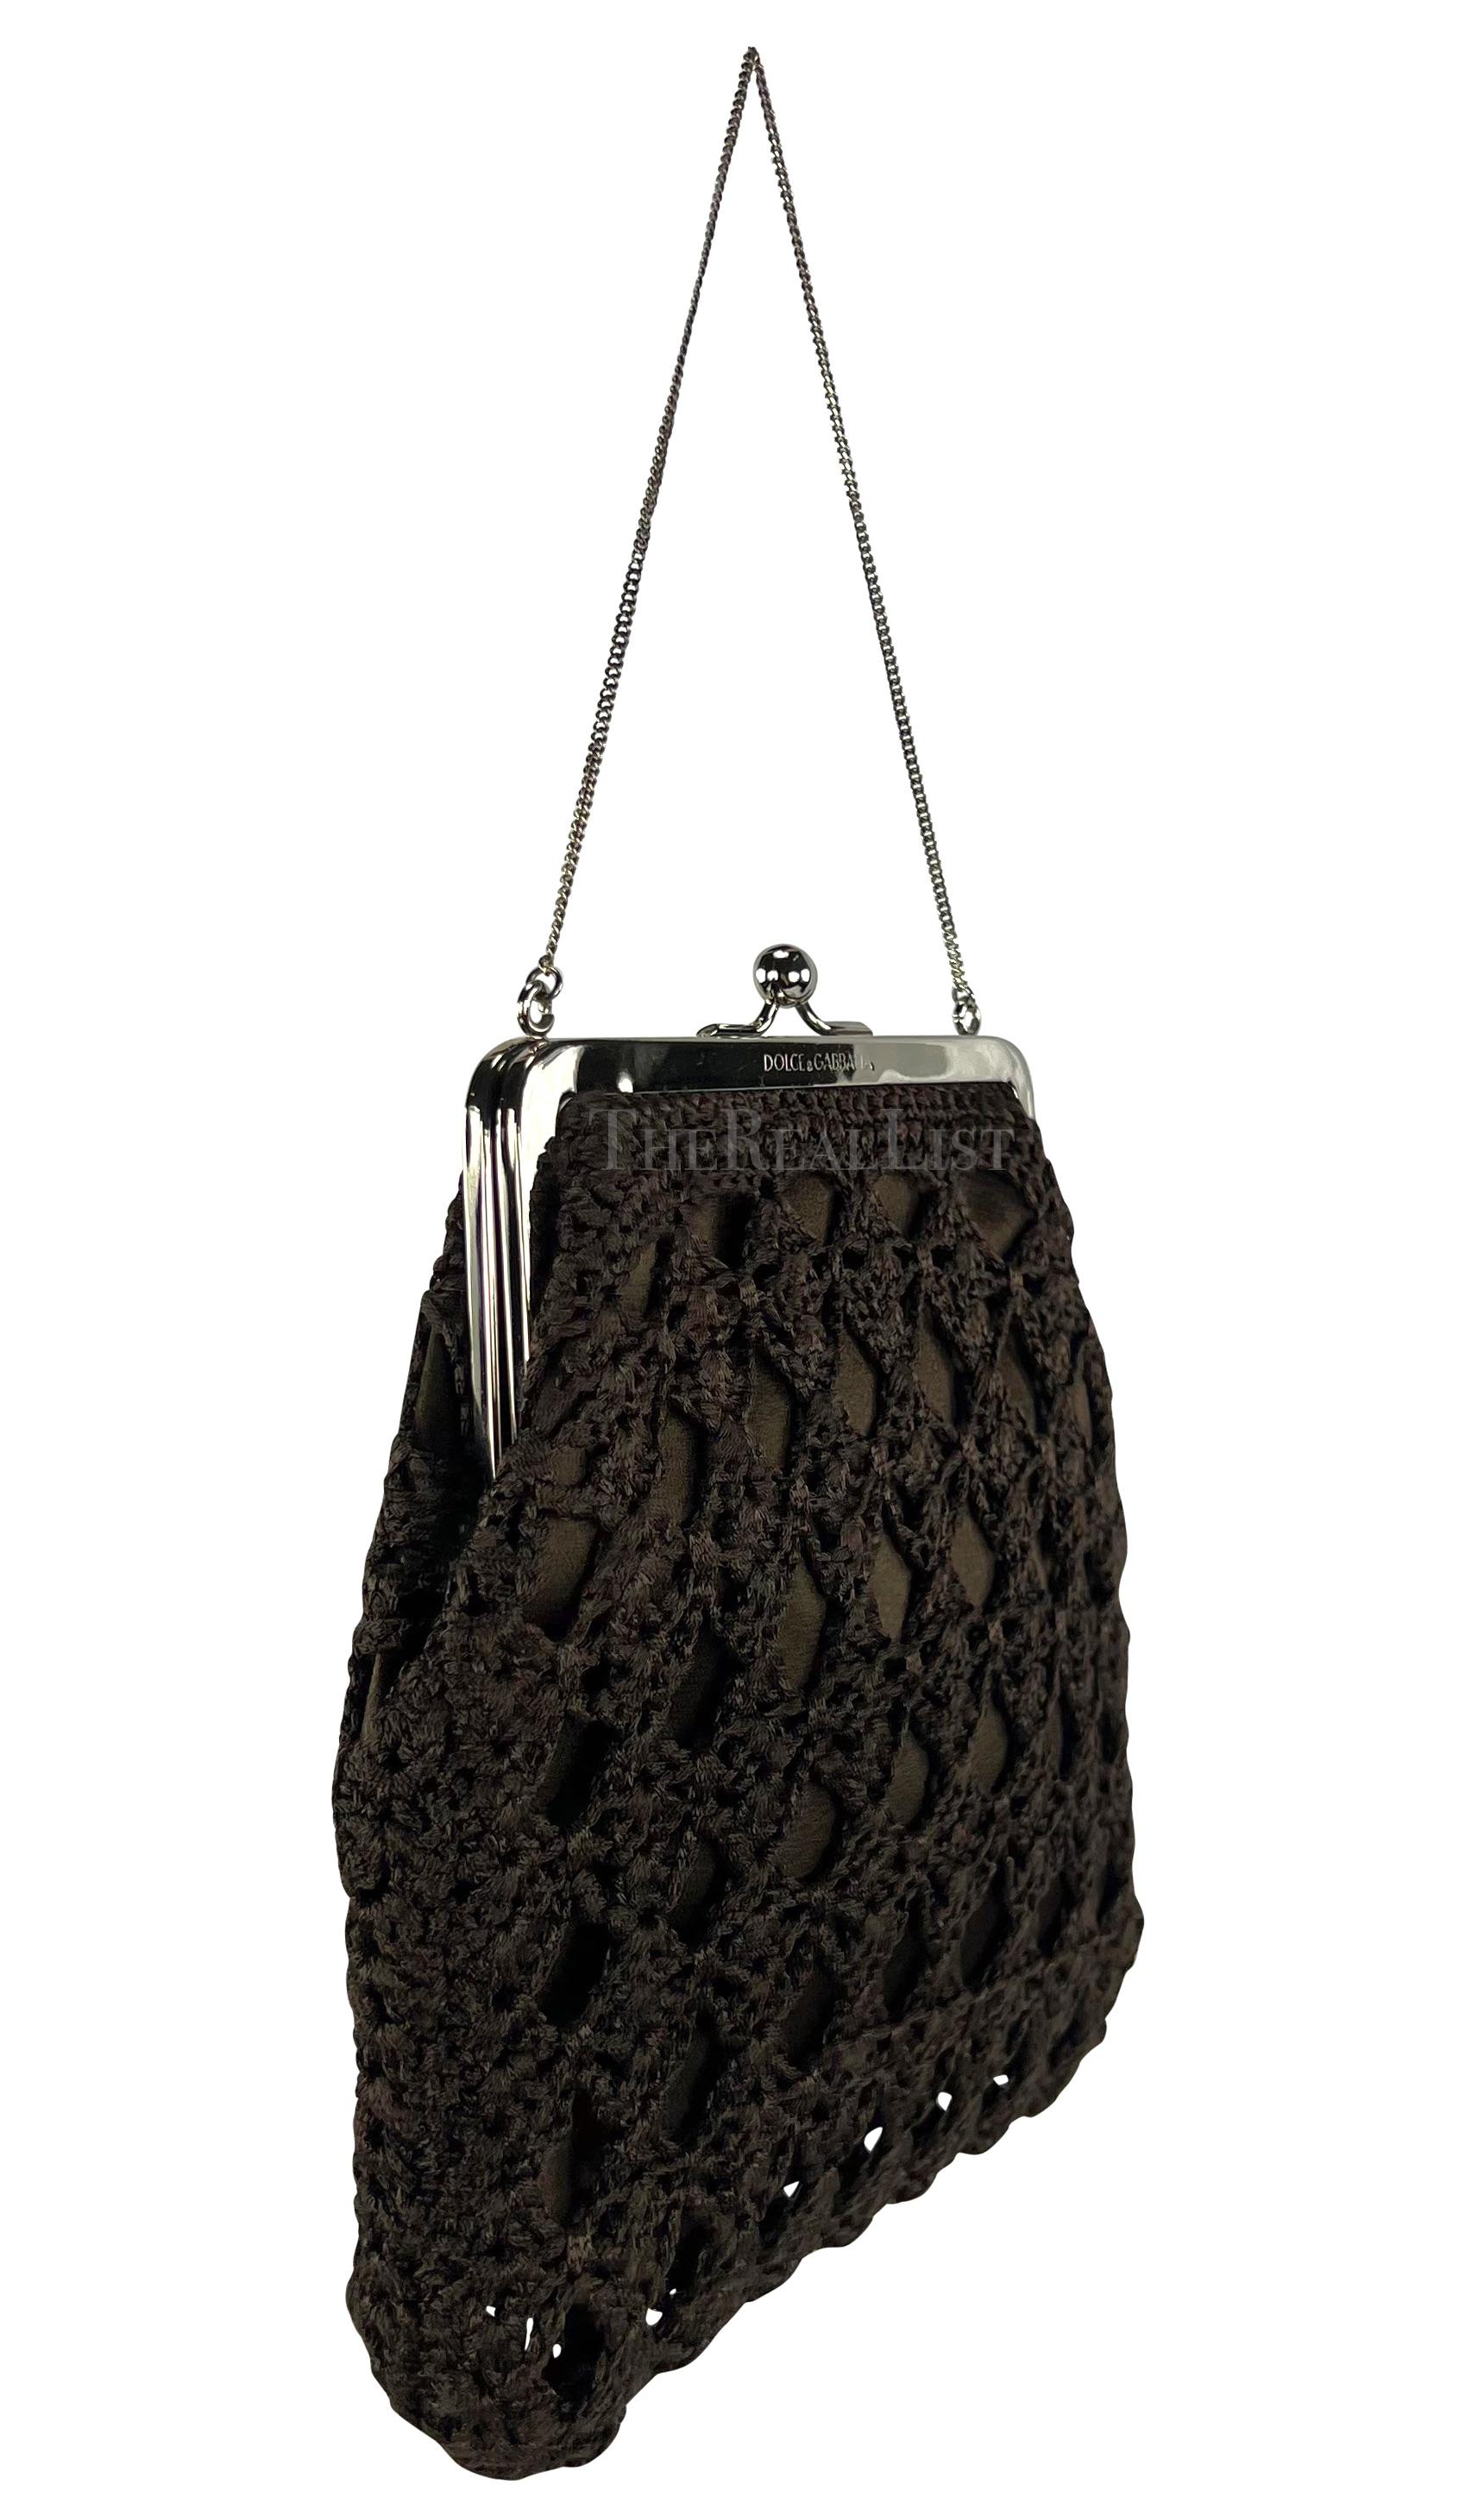 S/S 1997 Dolce & Gabbana Bown Crochet Clam Closure Mini Evening Bag For Sale 4